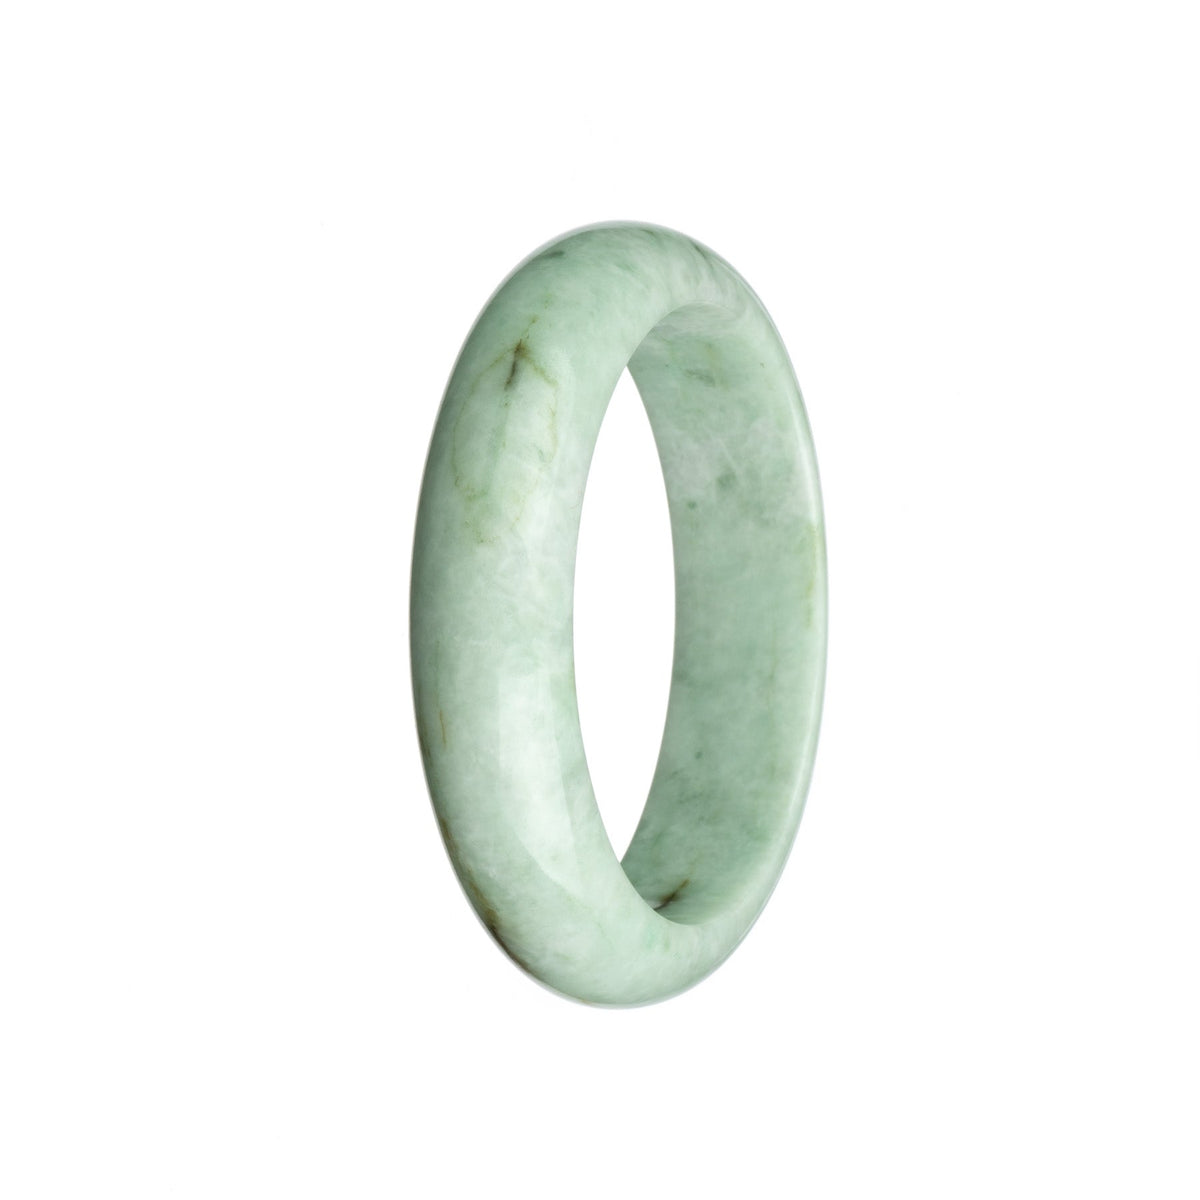 Certified Type A Pale Green Jadeite Jade Bangle Bracelet - 57mm Half Moon